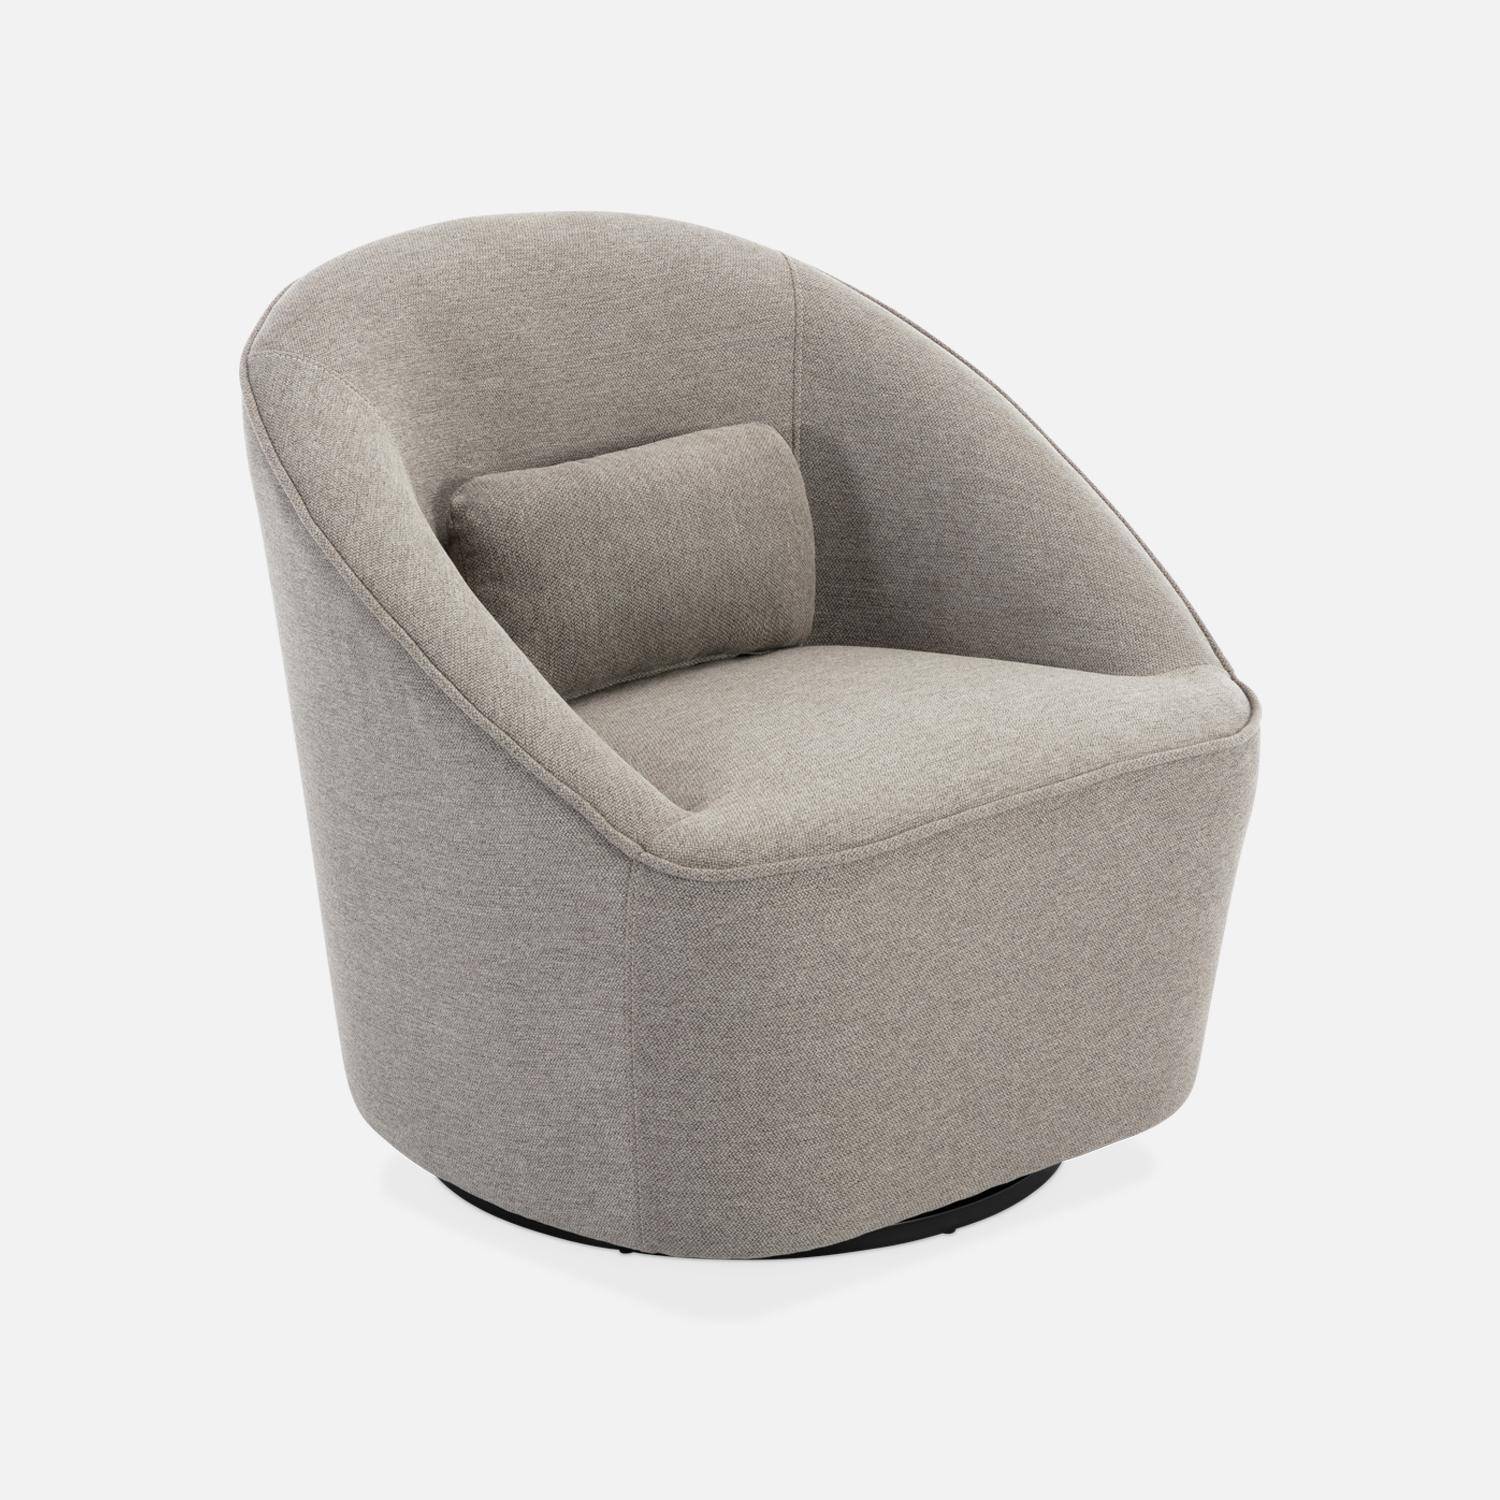 360° draaibare fauteuil, Lana, in taupe stof, met kussen B 80 x D 73 x H 77cm Photo3